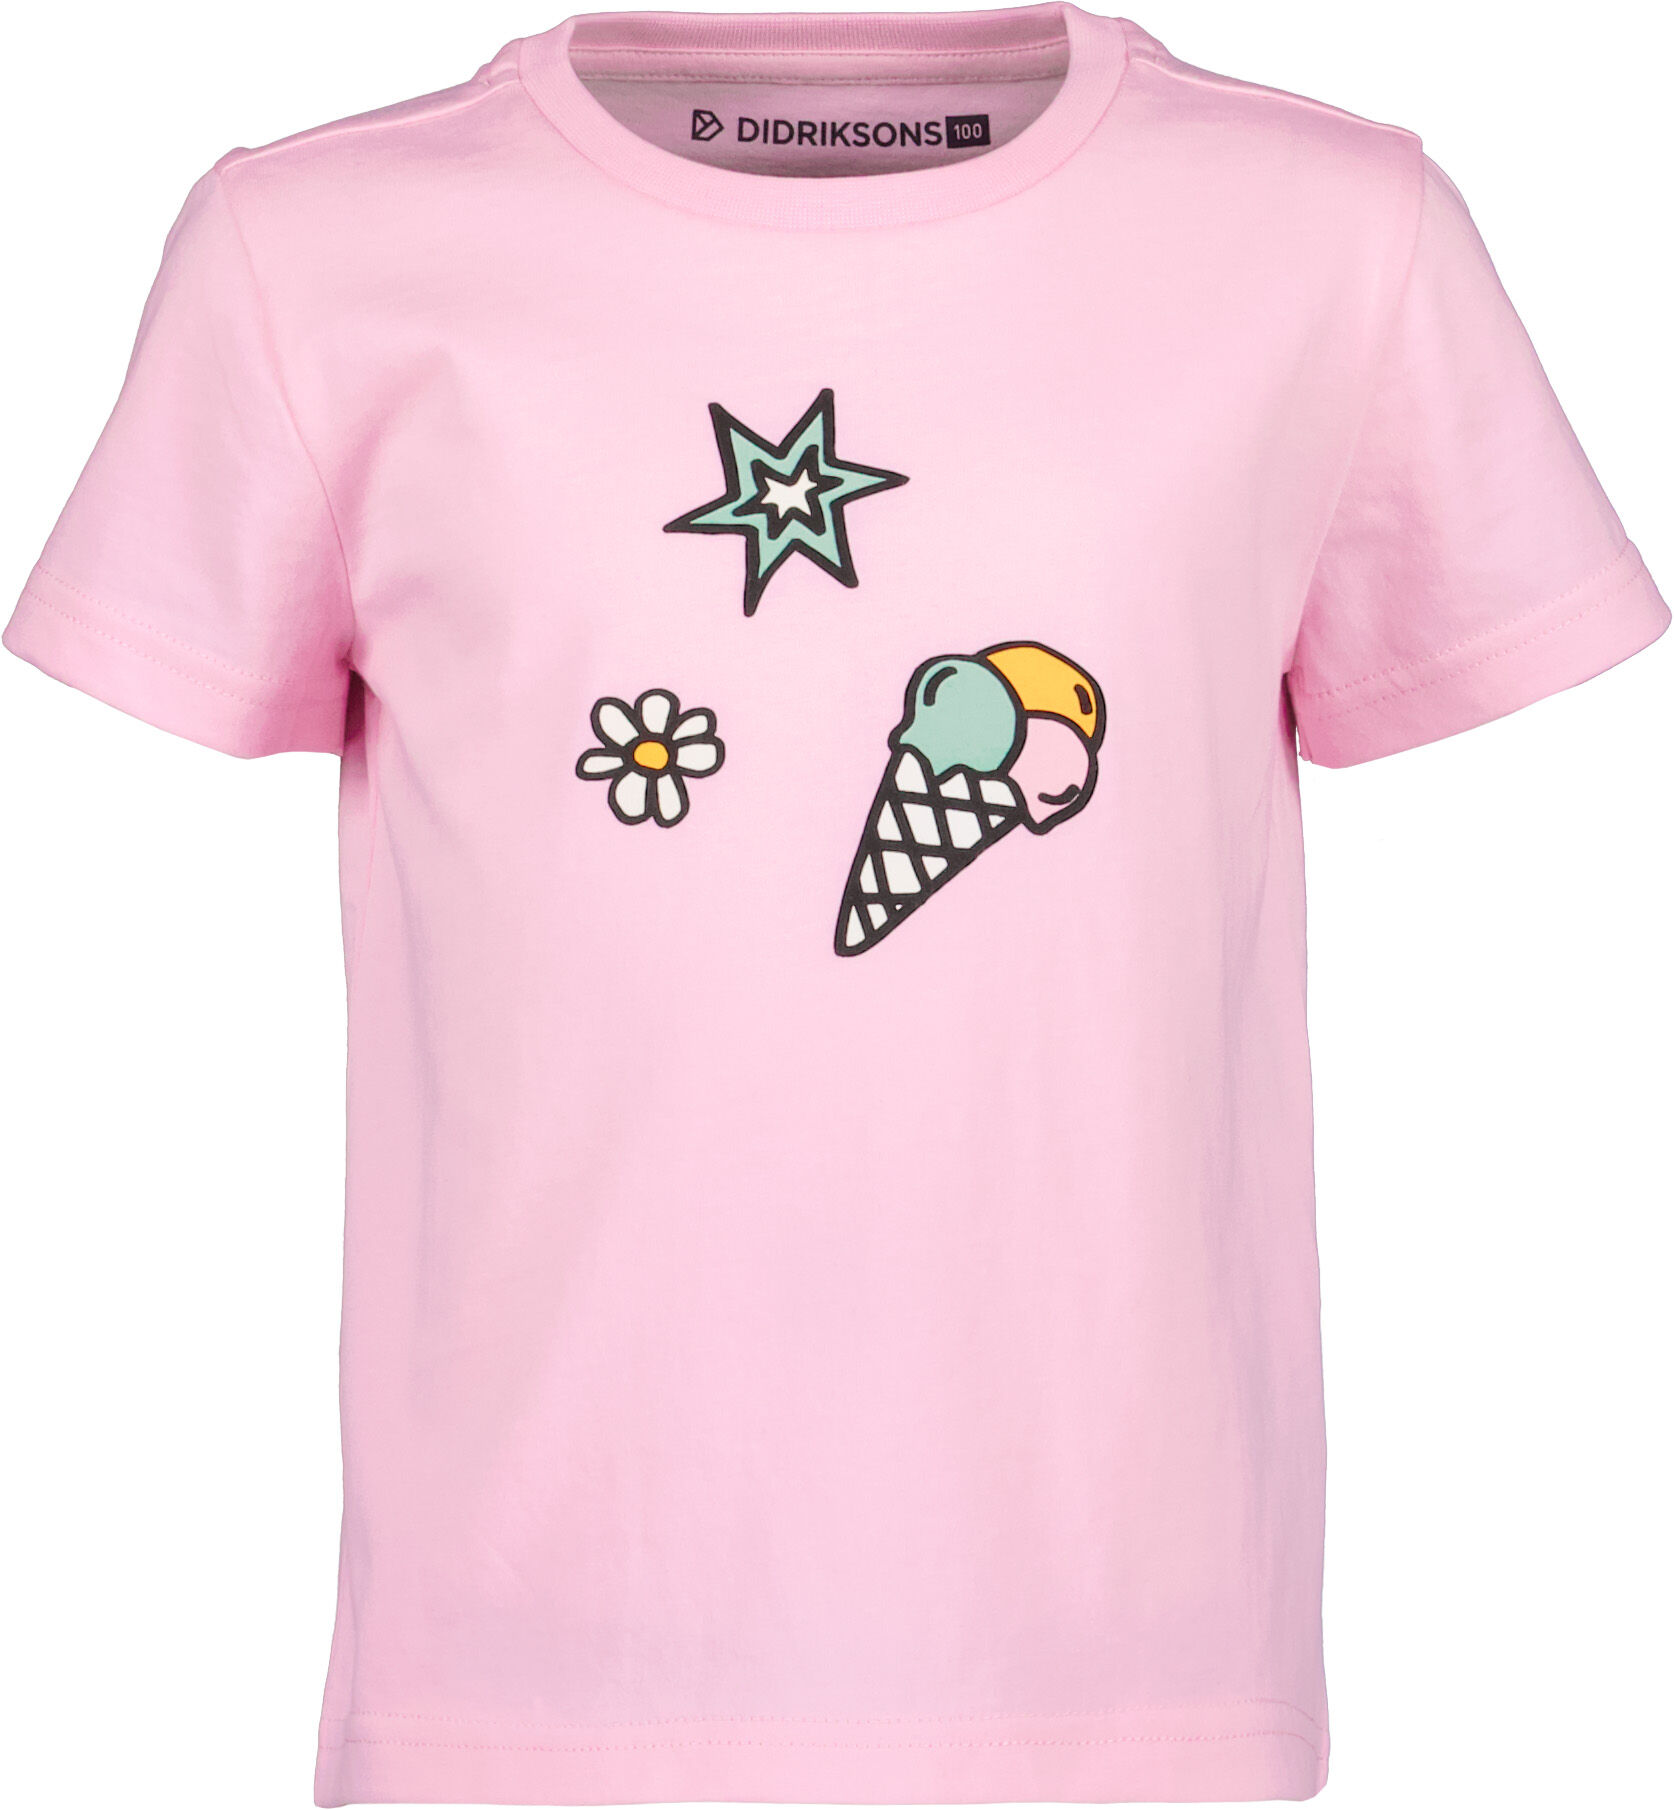 Didriksons Mynta T-shirt Orchid Pink 80